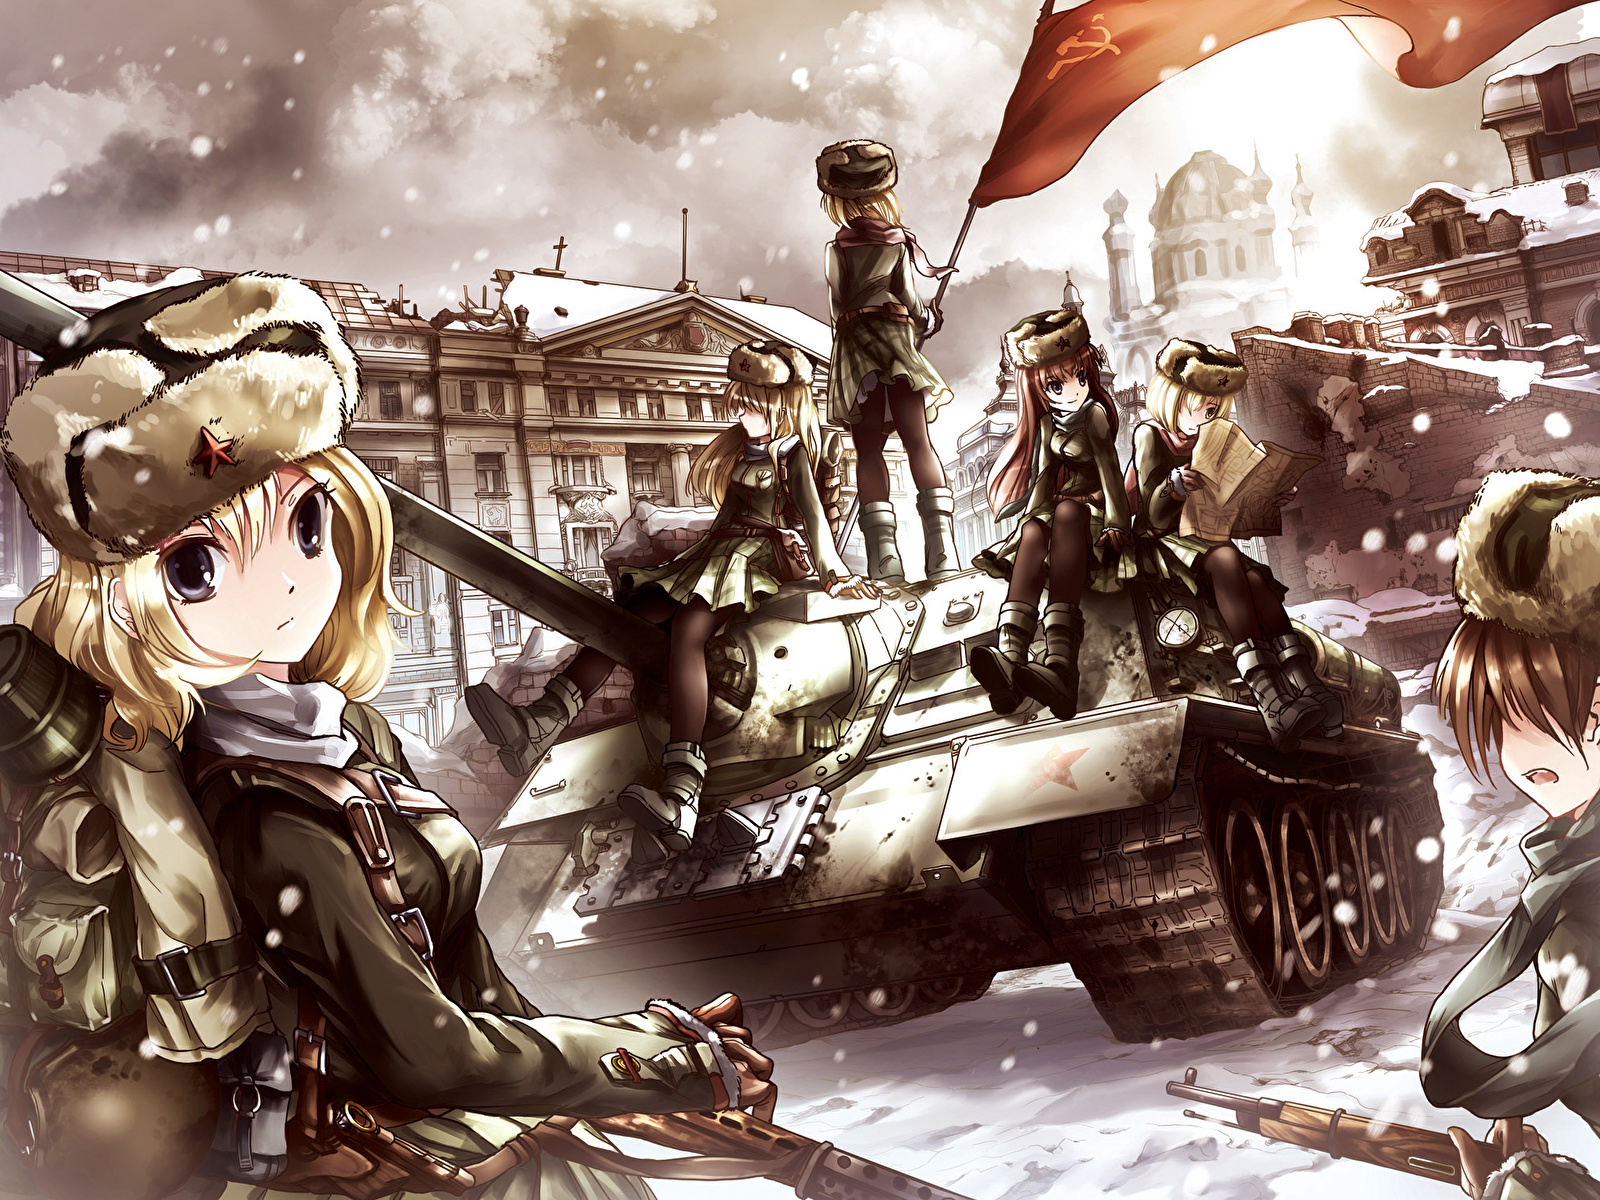 Tank girls  A review of the Girls und Panzer anime  chaostangent